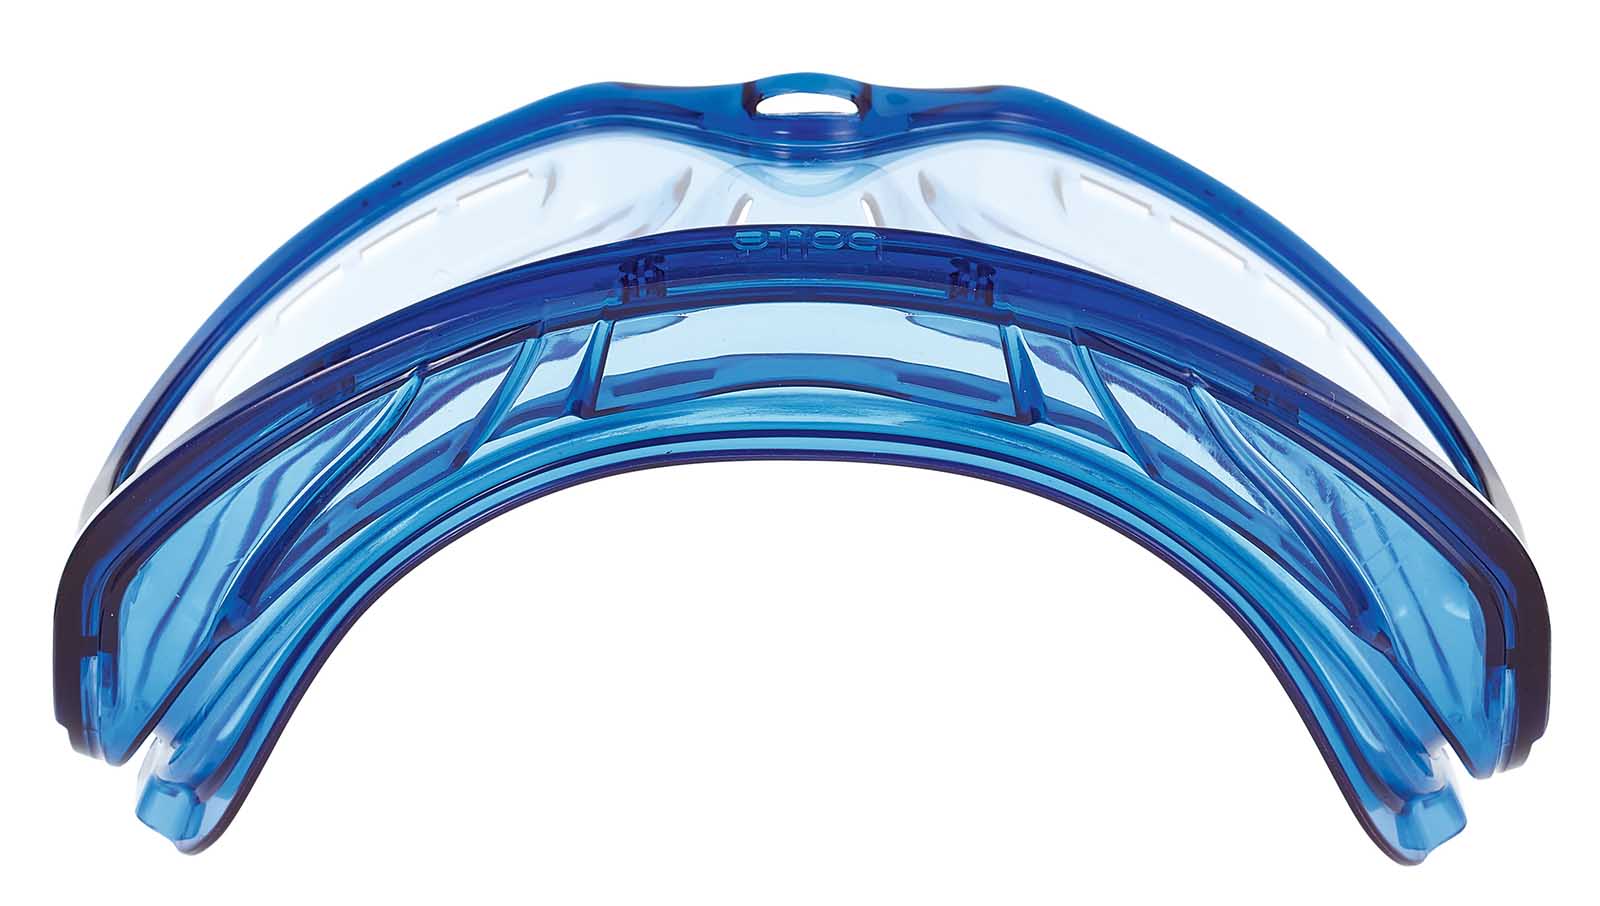 Bolle SUPERBLAST Ventilated Safety Goggles SUPBLAPSI